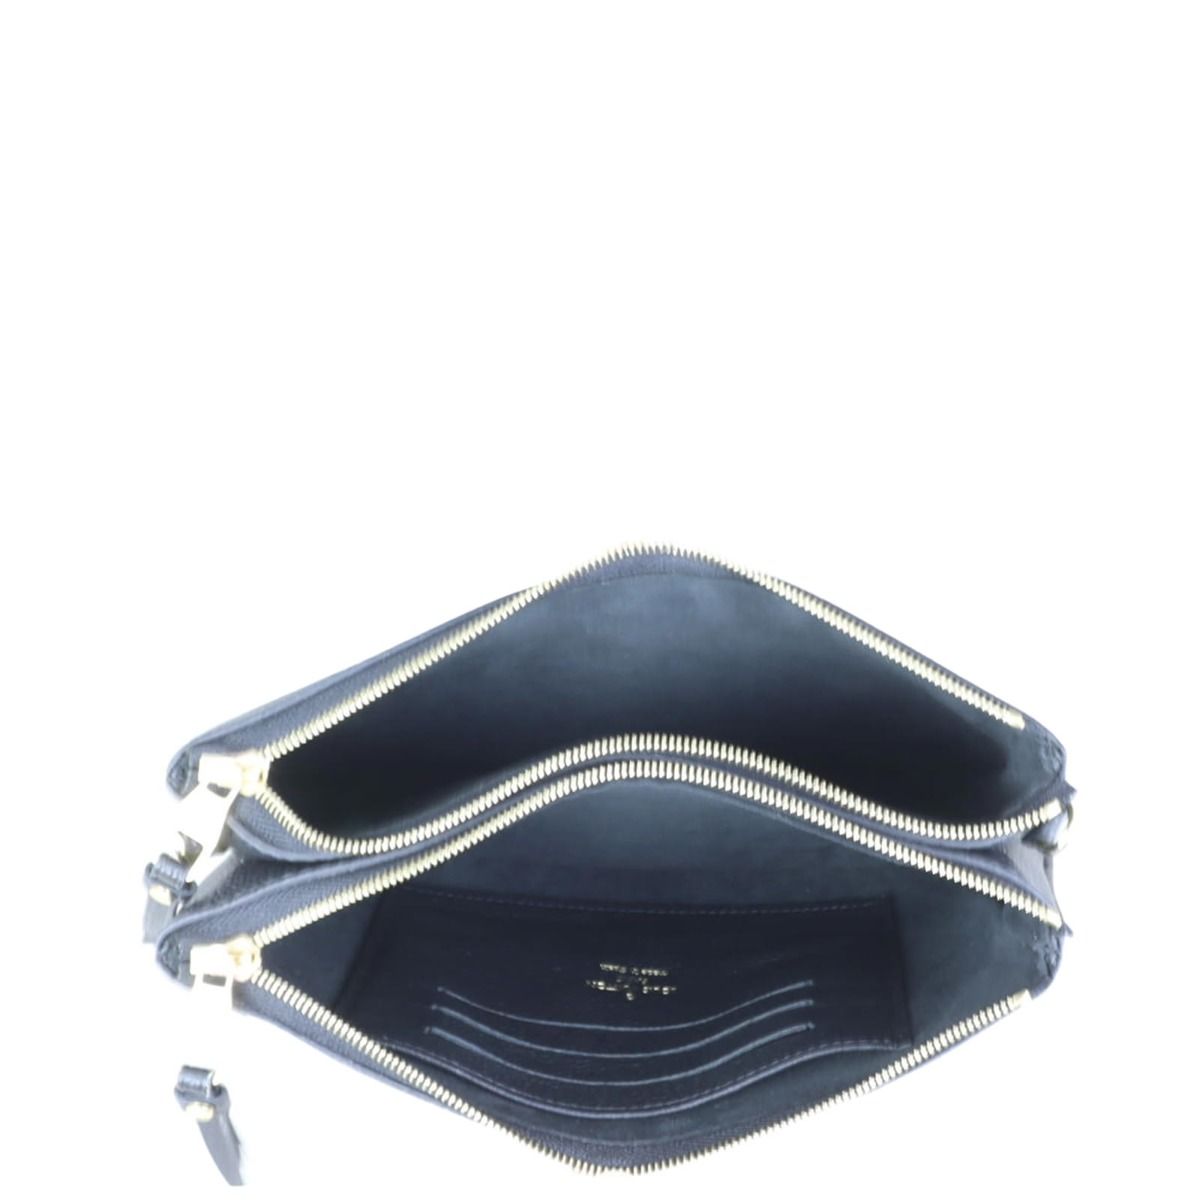 Louis Vuitton Monogram Empreinte Double Zip Pochette Handbag